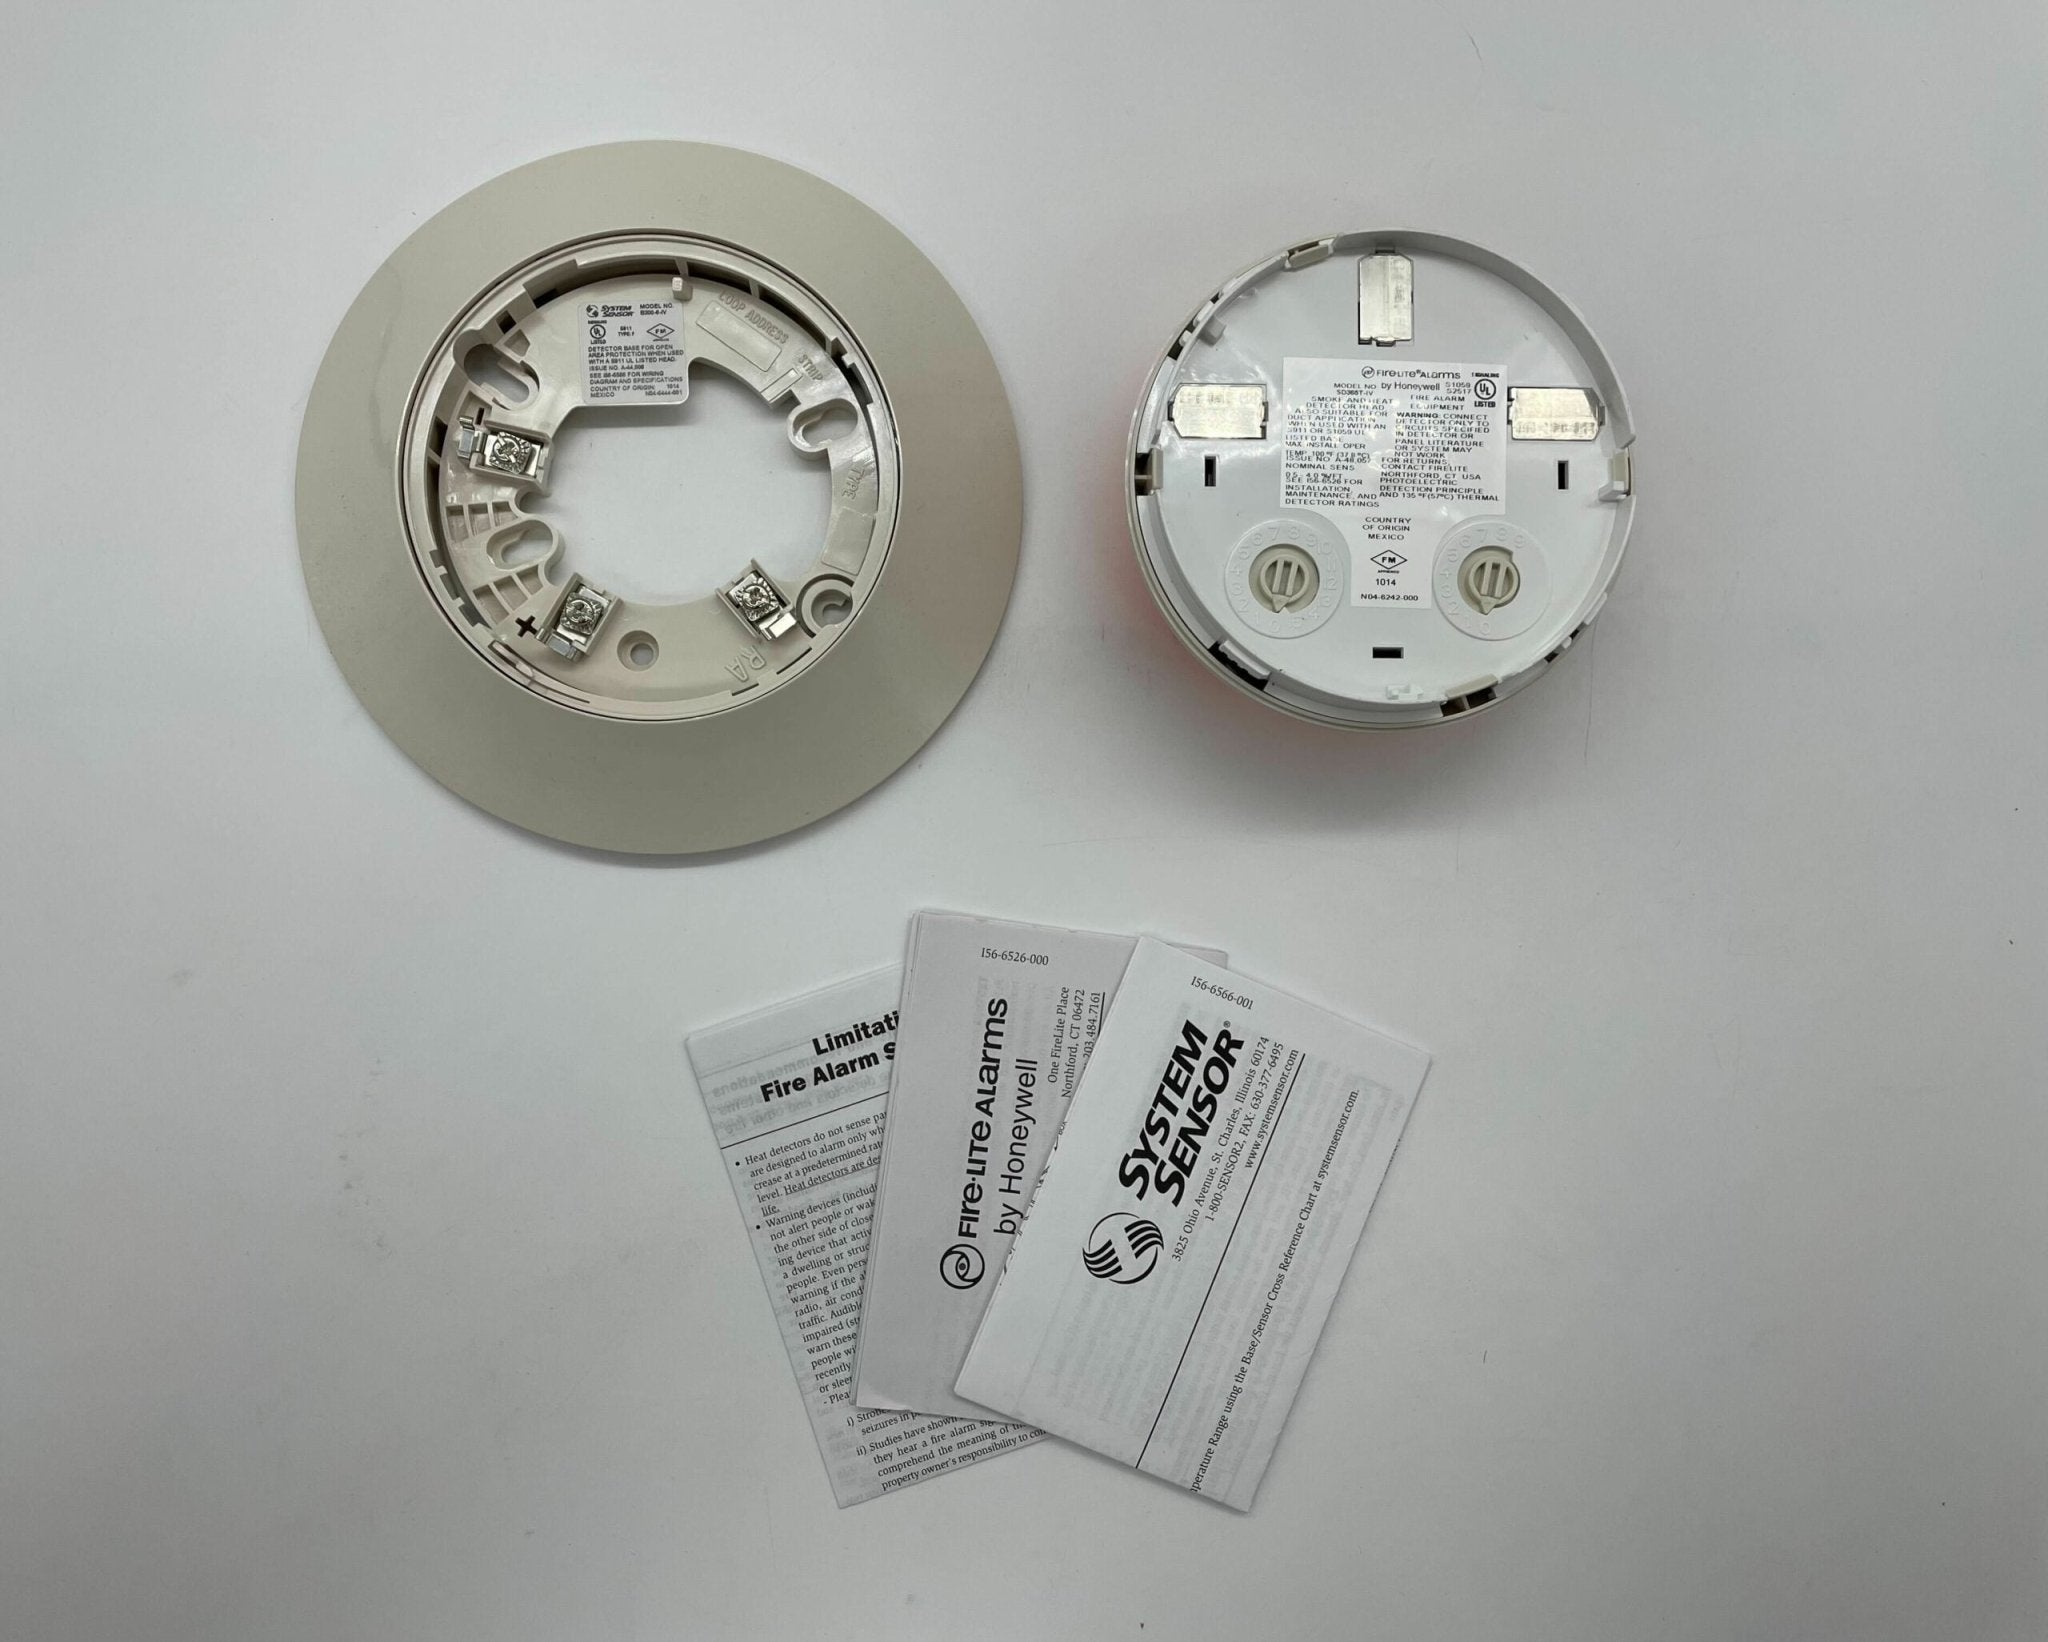 Firelite SD365T-IV - The Fire Alarm Supplier